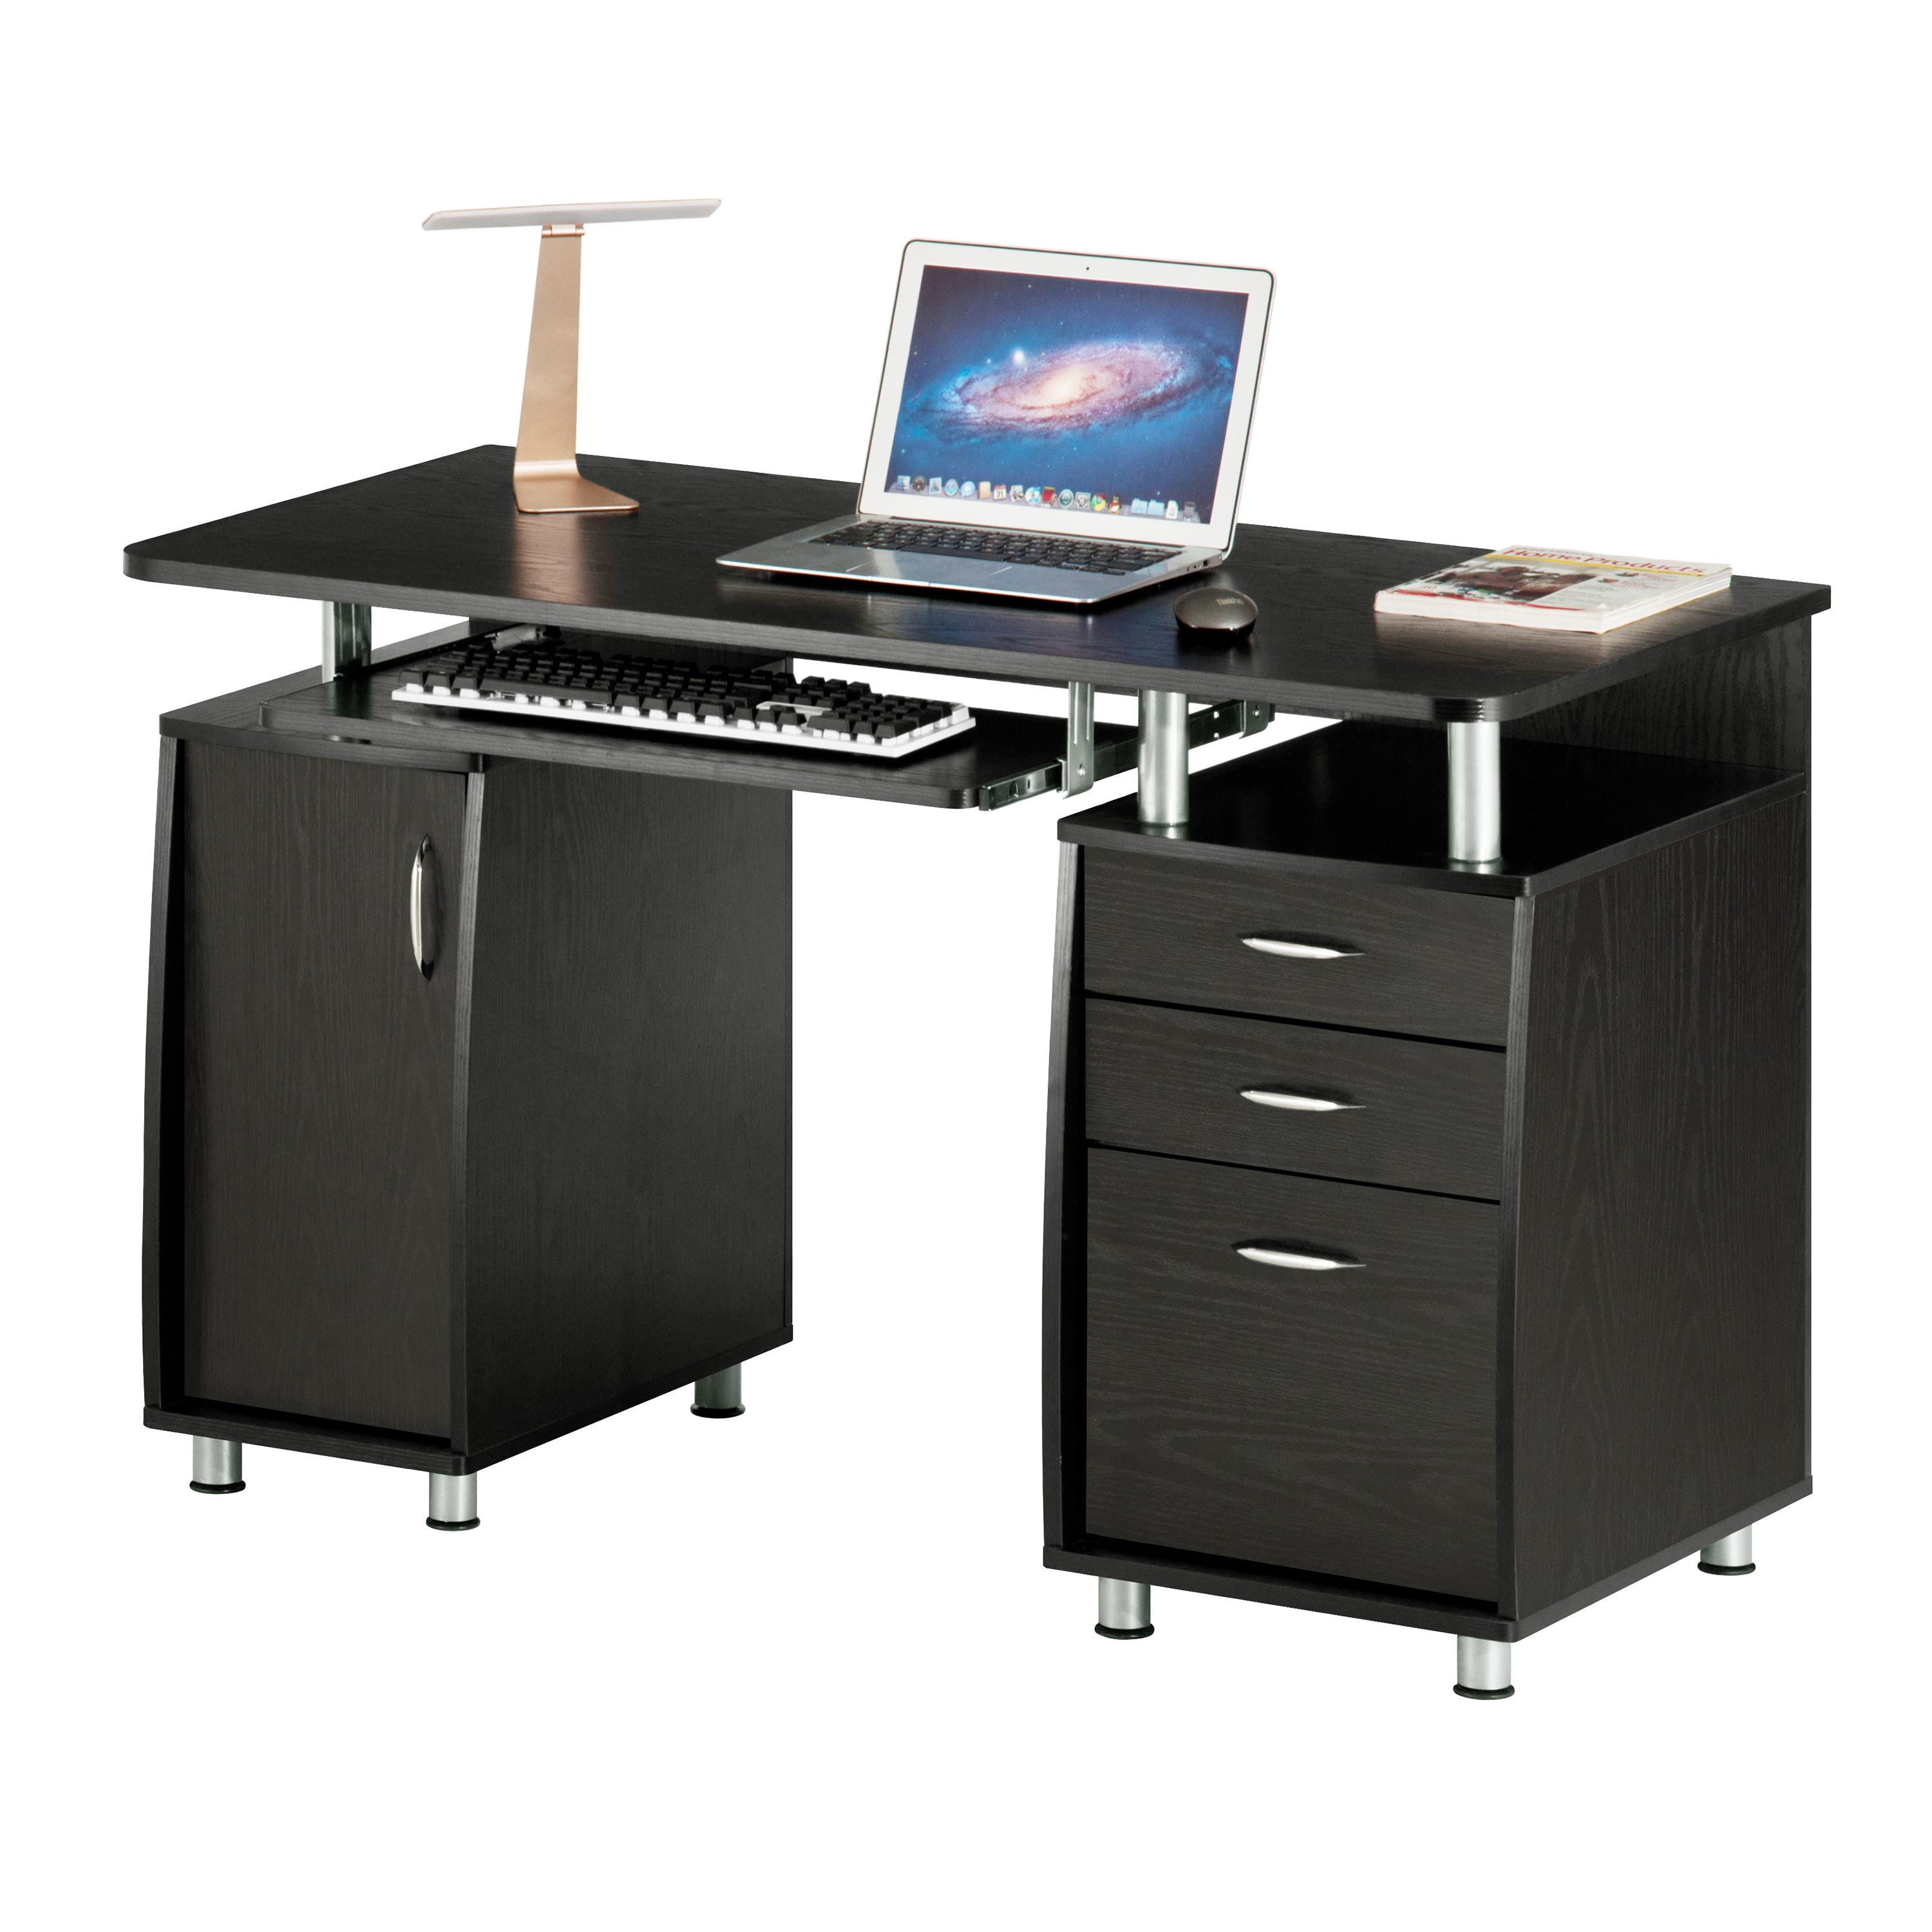 Computer Desk with Storage